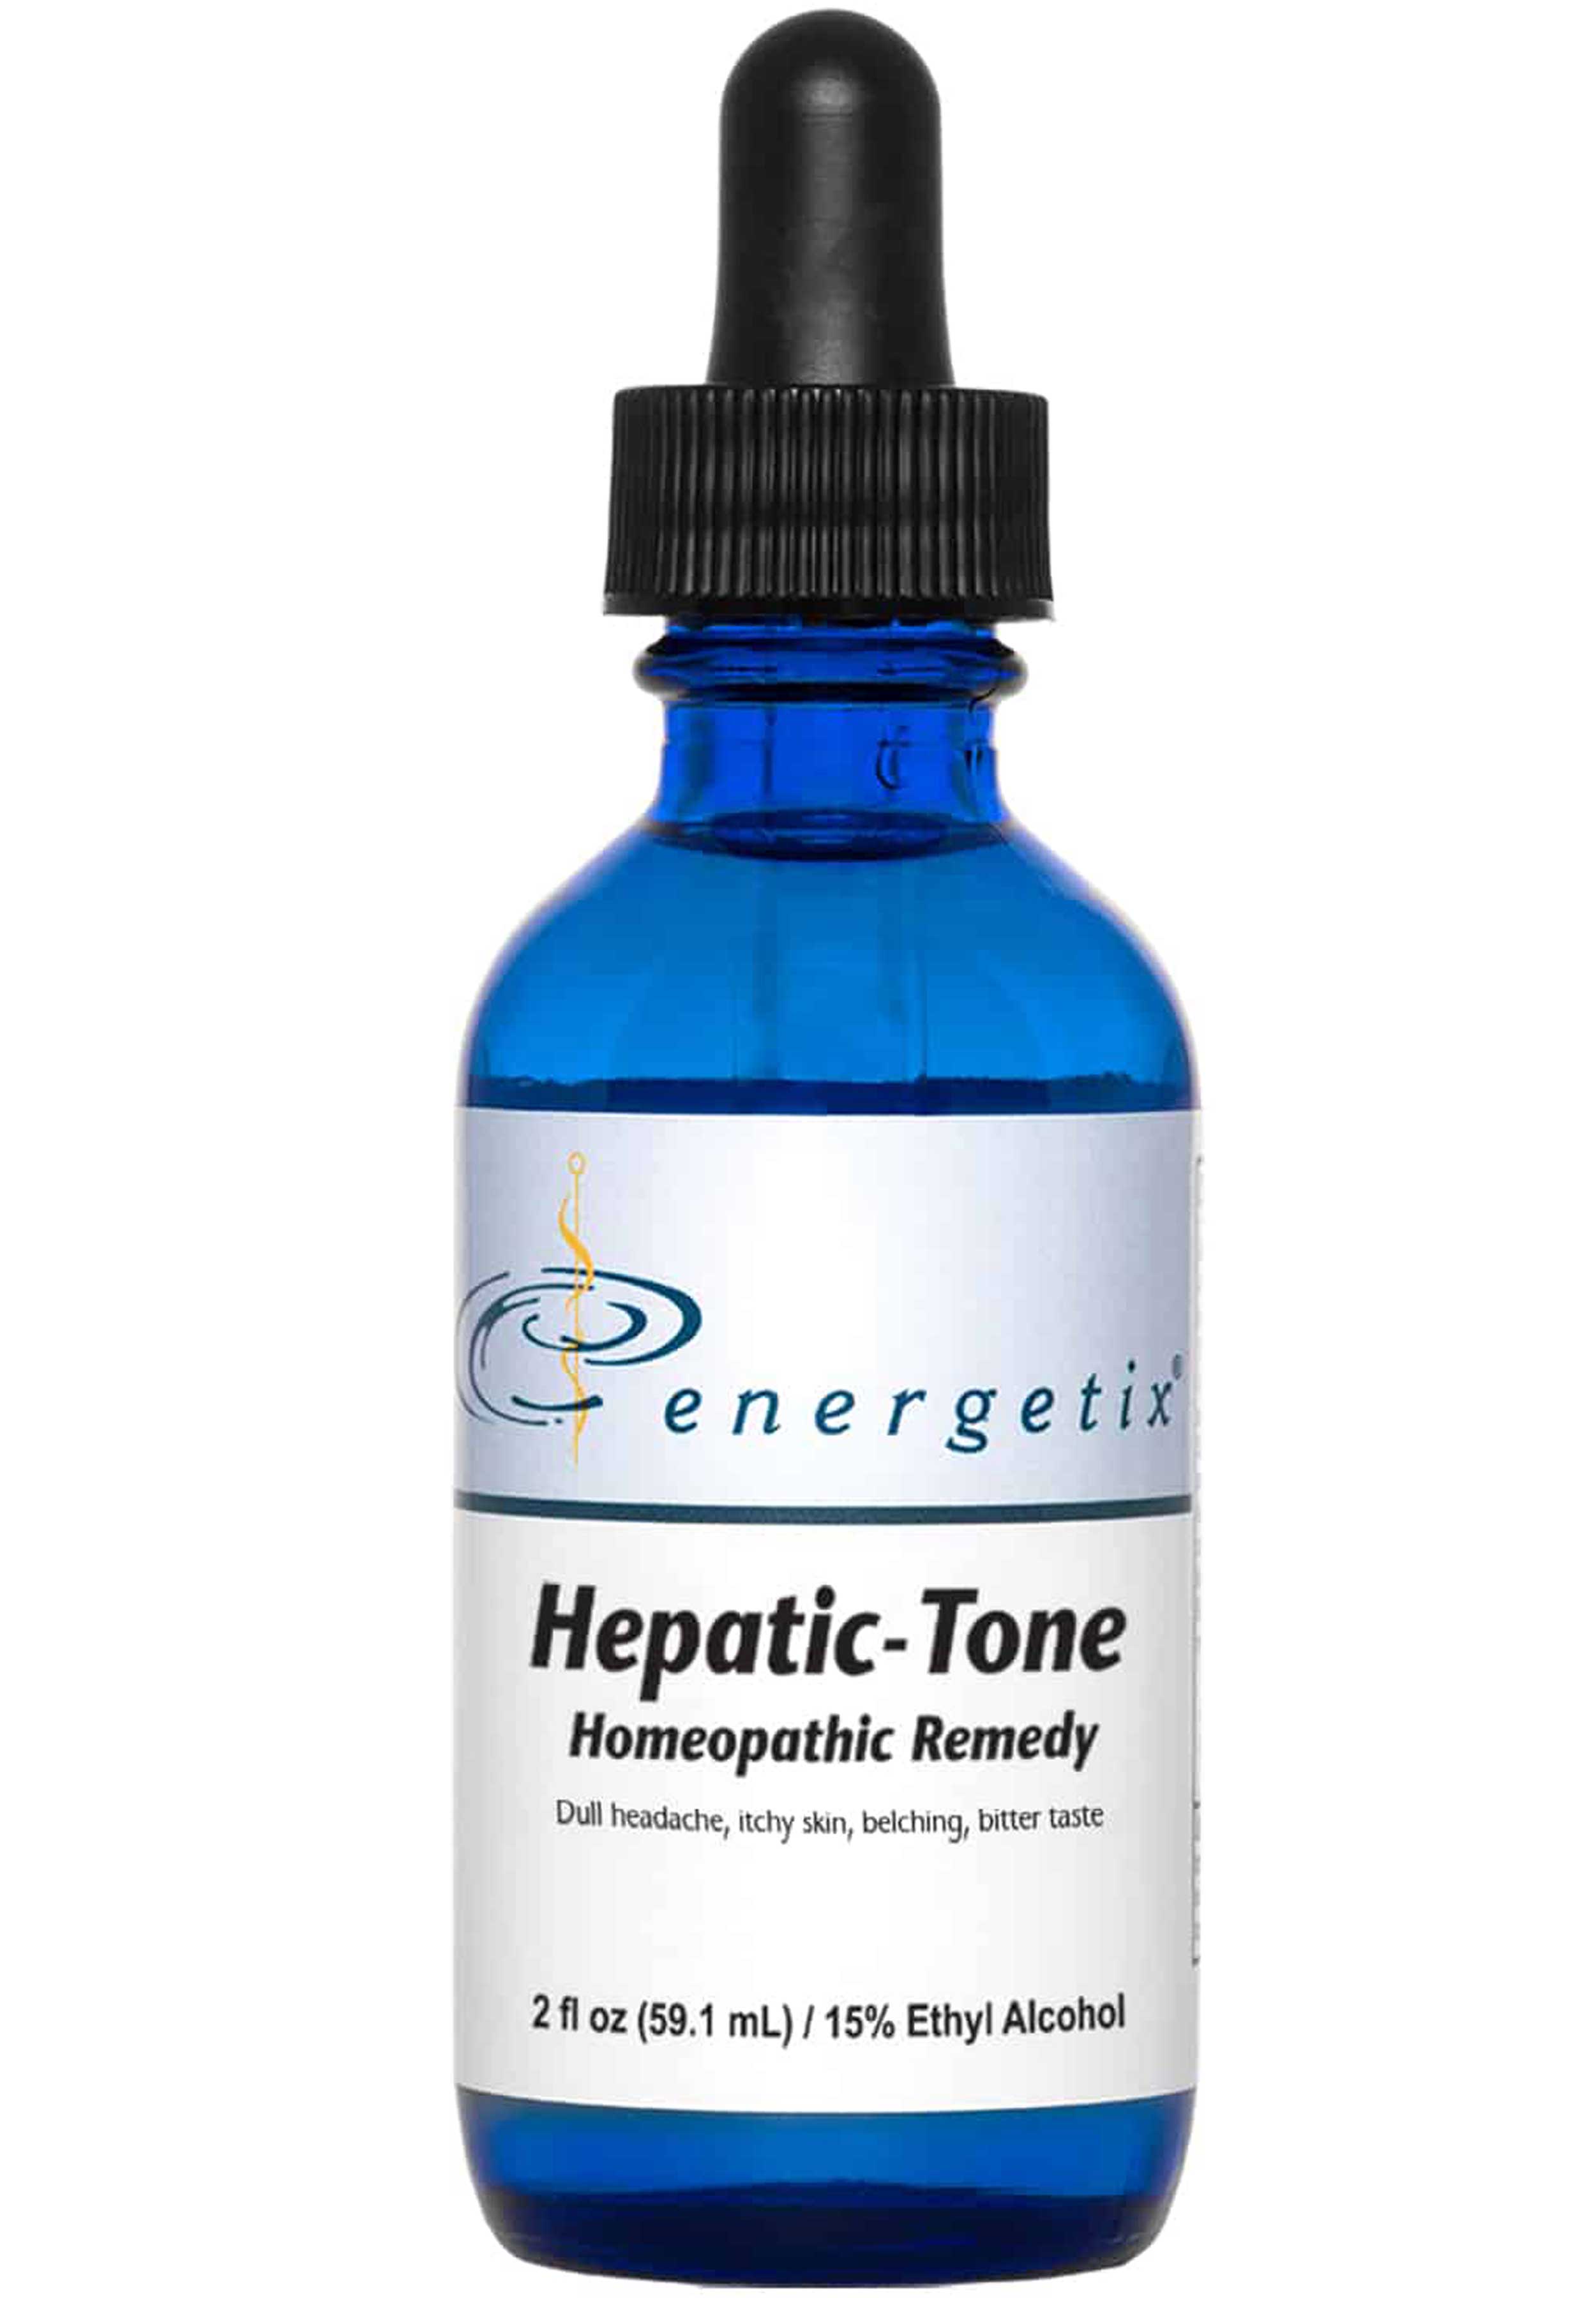 Energetix Hepatic-Tone